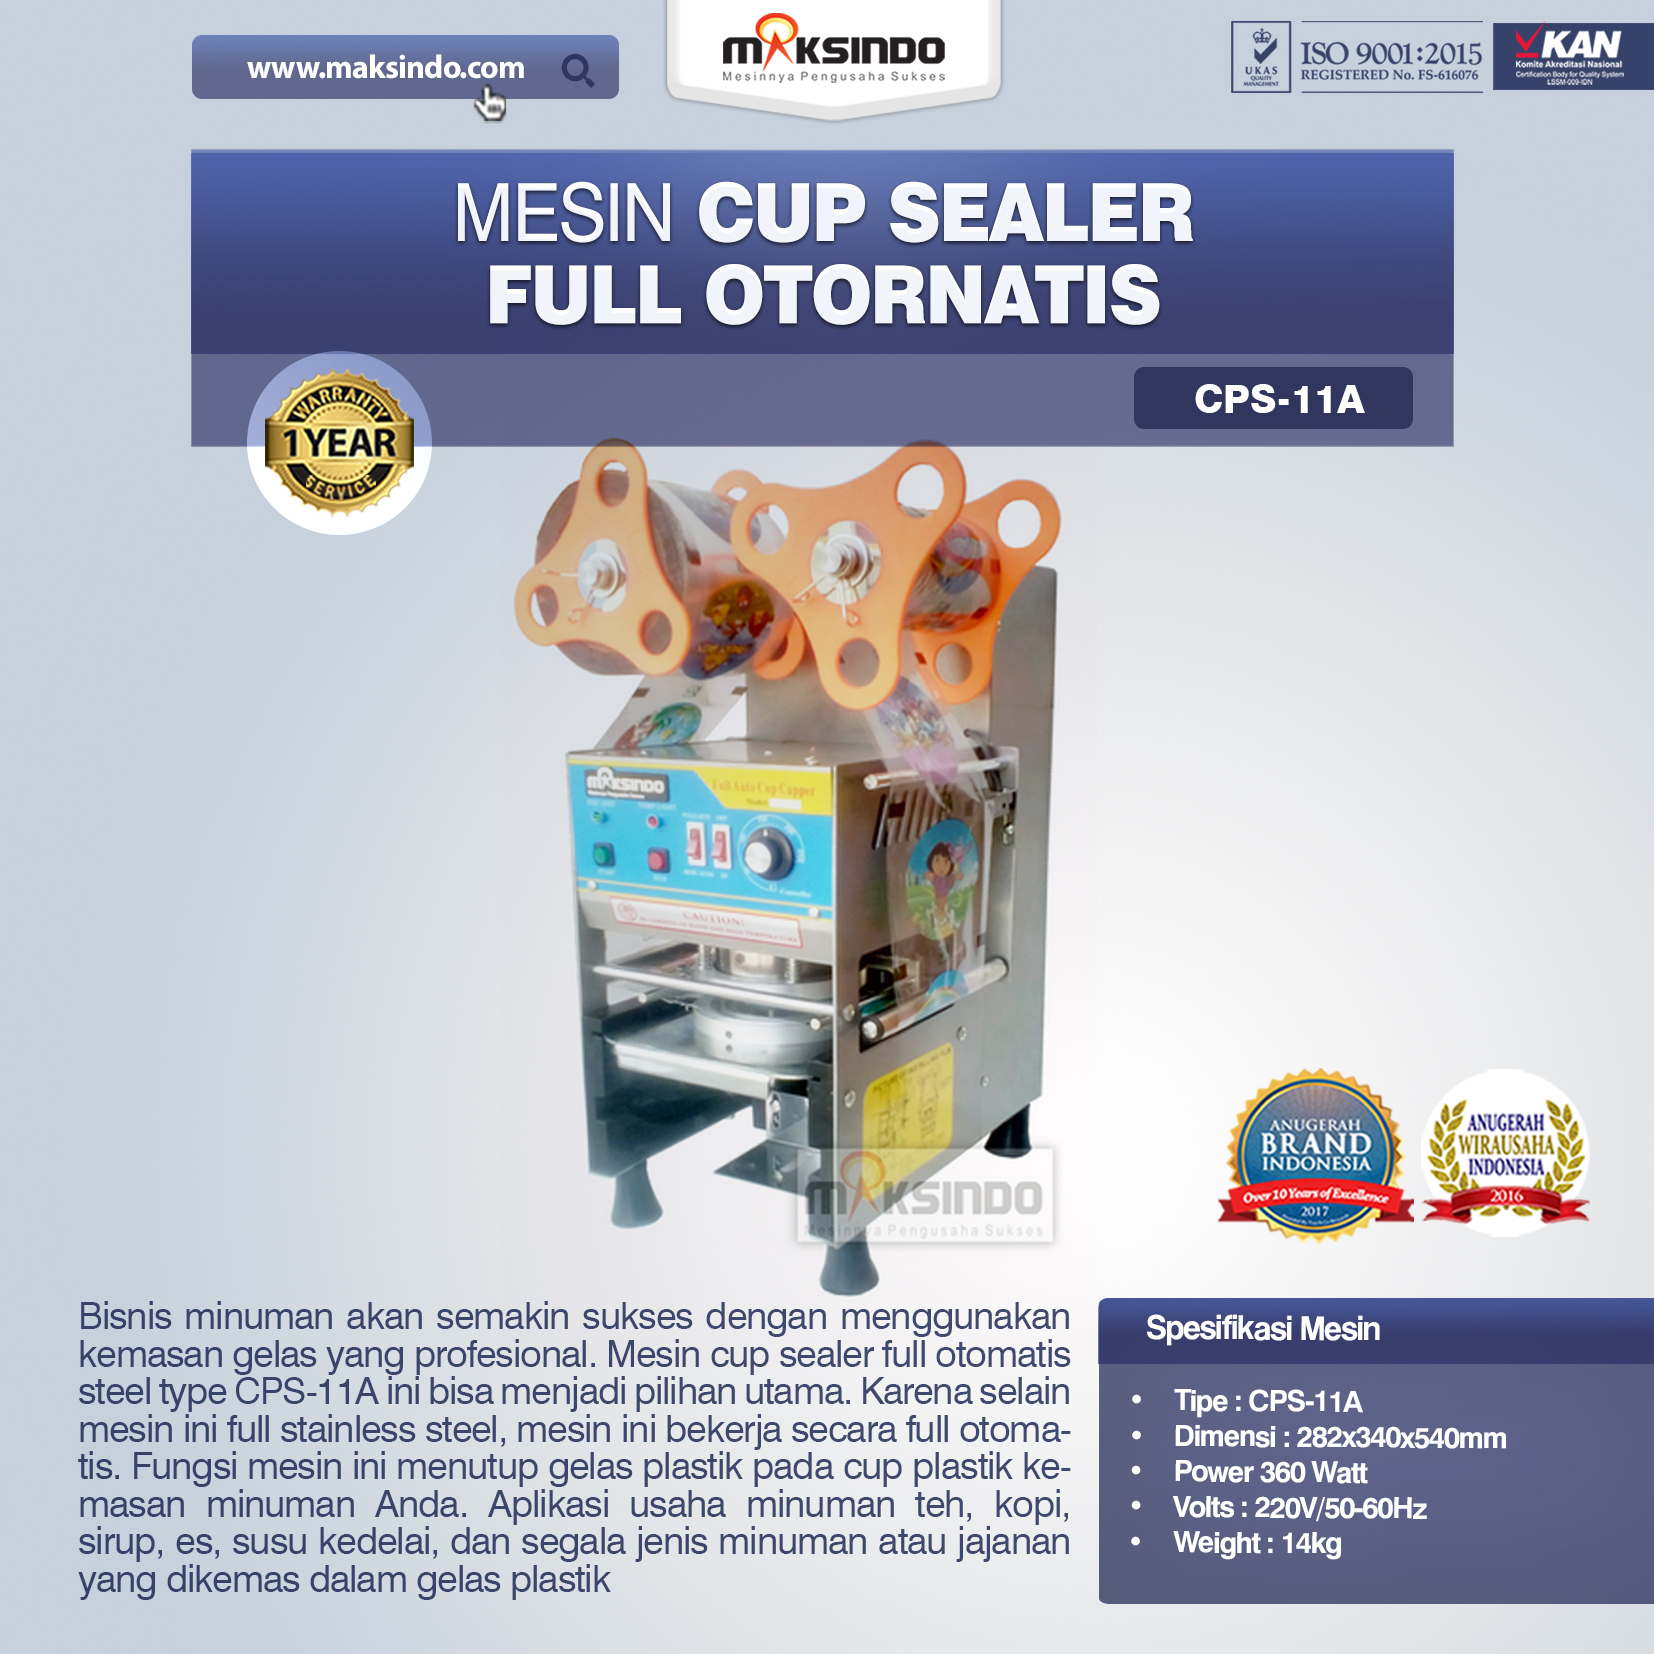 Mesin Cup Sealer Full Otomatis (CPS-11A)